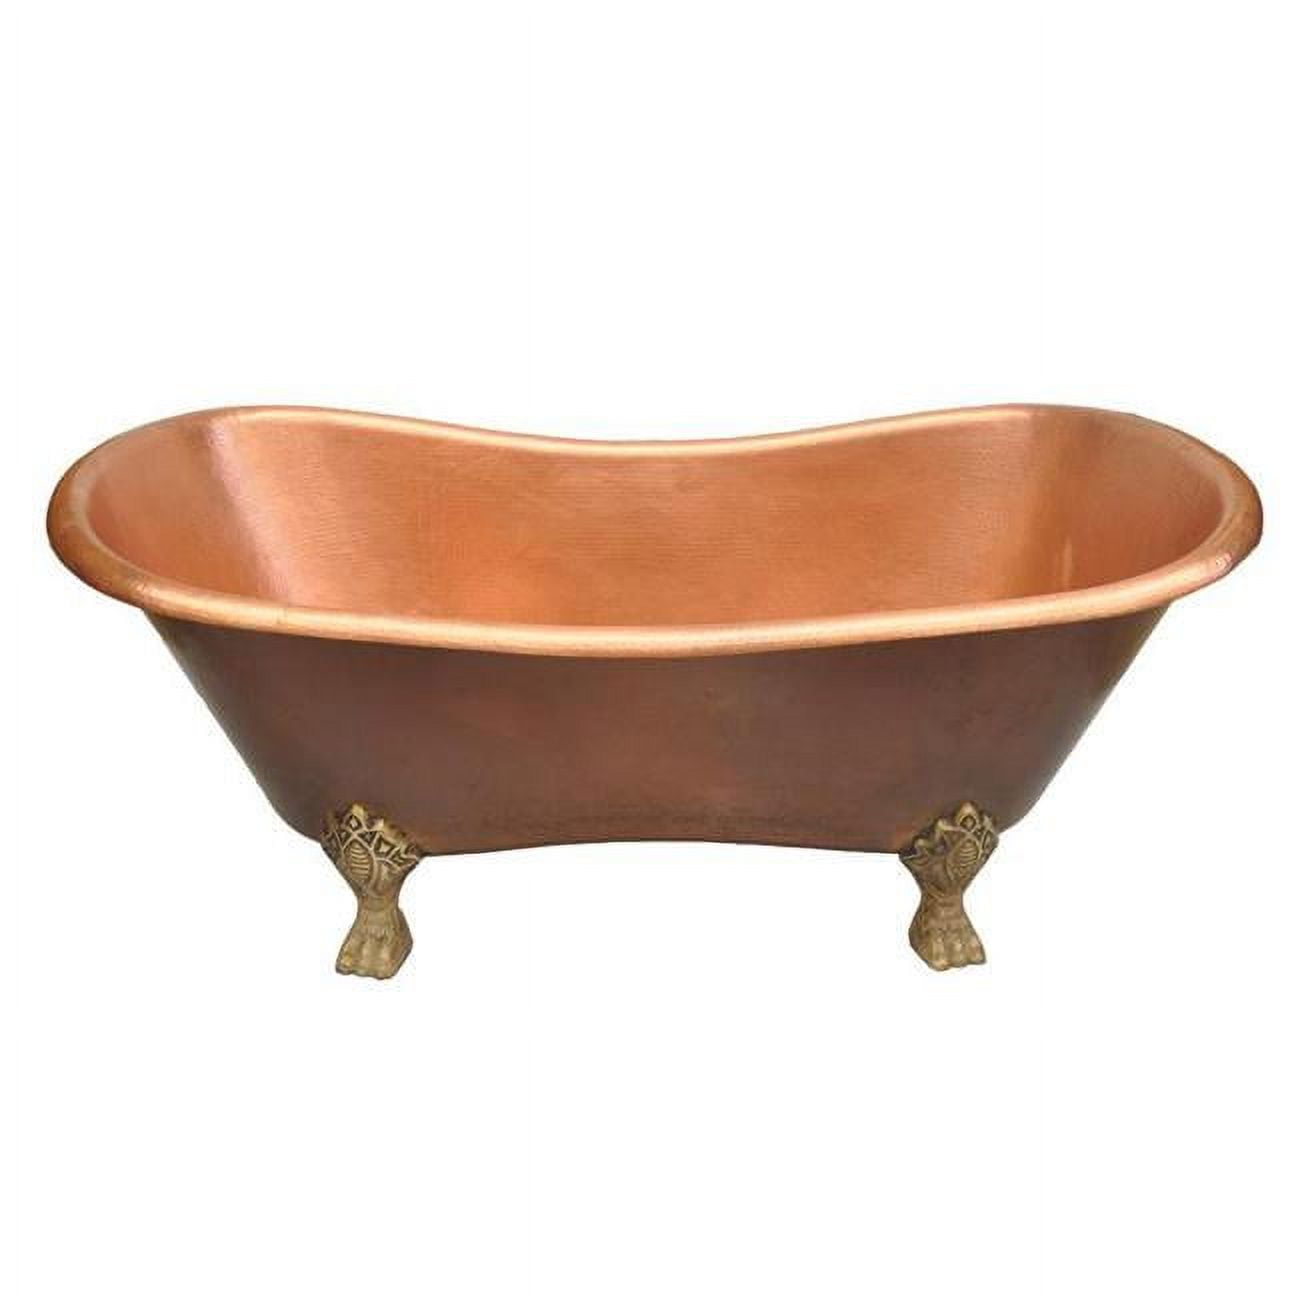 Cbt-at-72-db Copper Bath Tub Antique Design, Dark Brown - Large - 32 X 32 X 72 In.